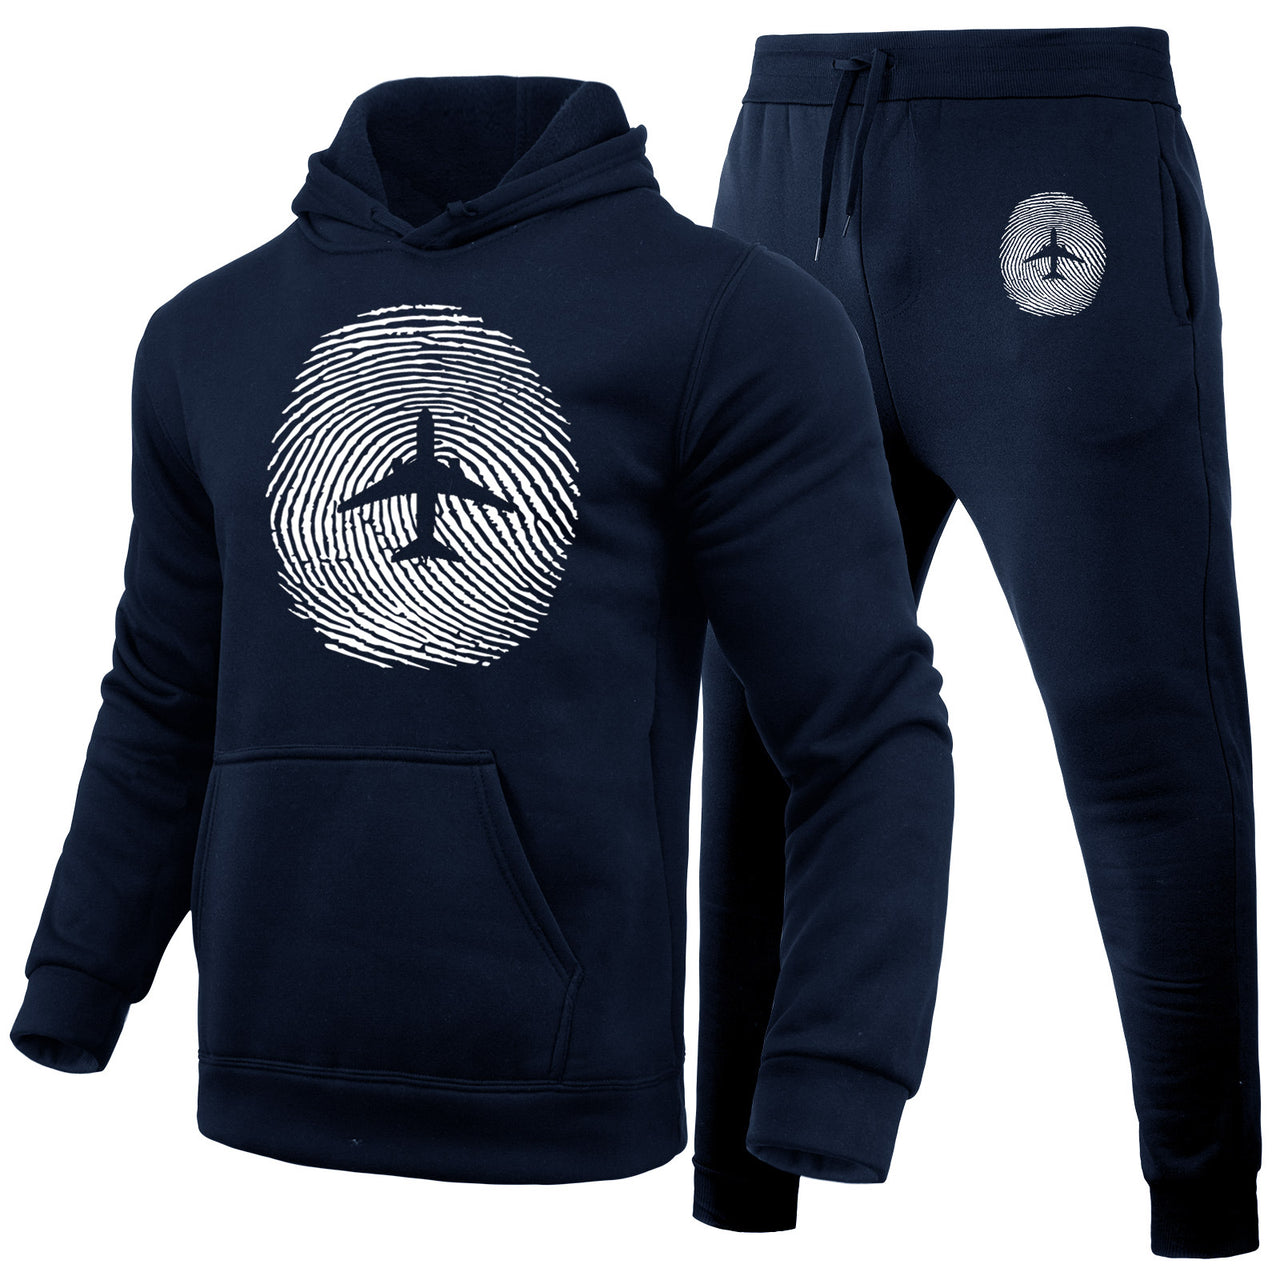 Aviation Finger Print Designed Hoodies & Sweatpants Set